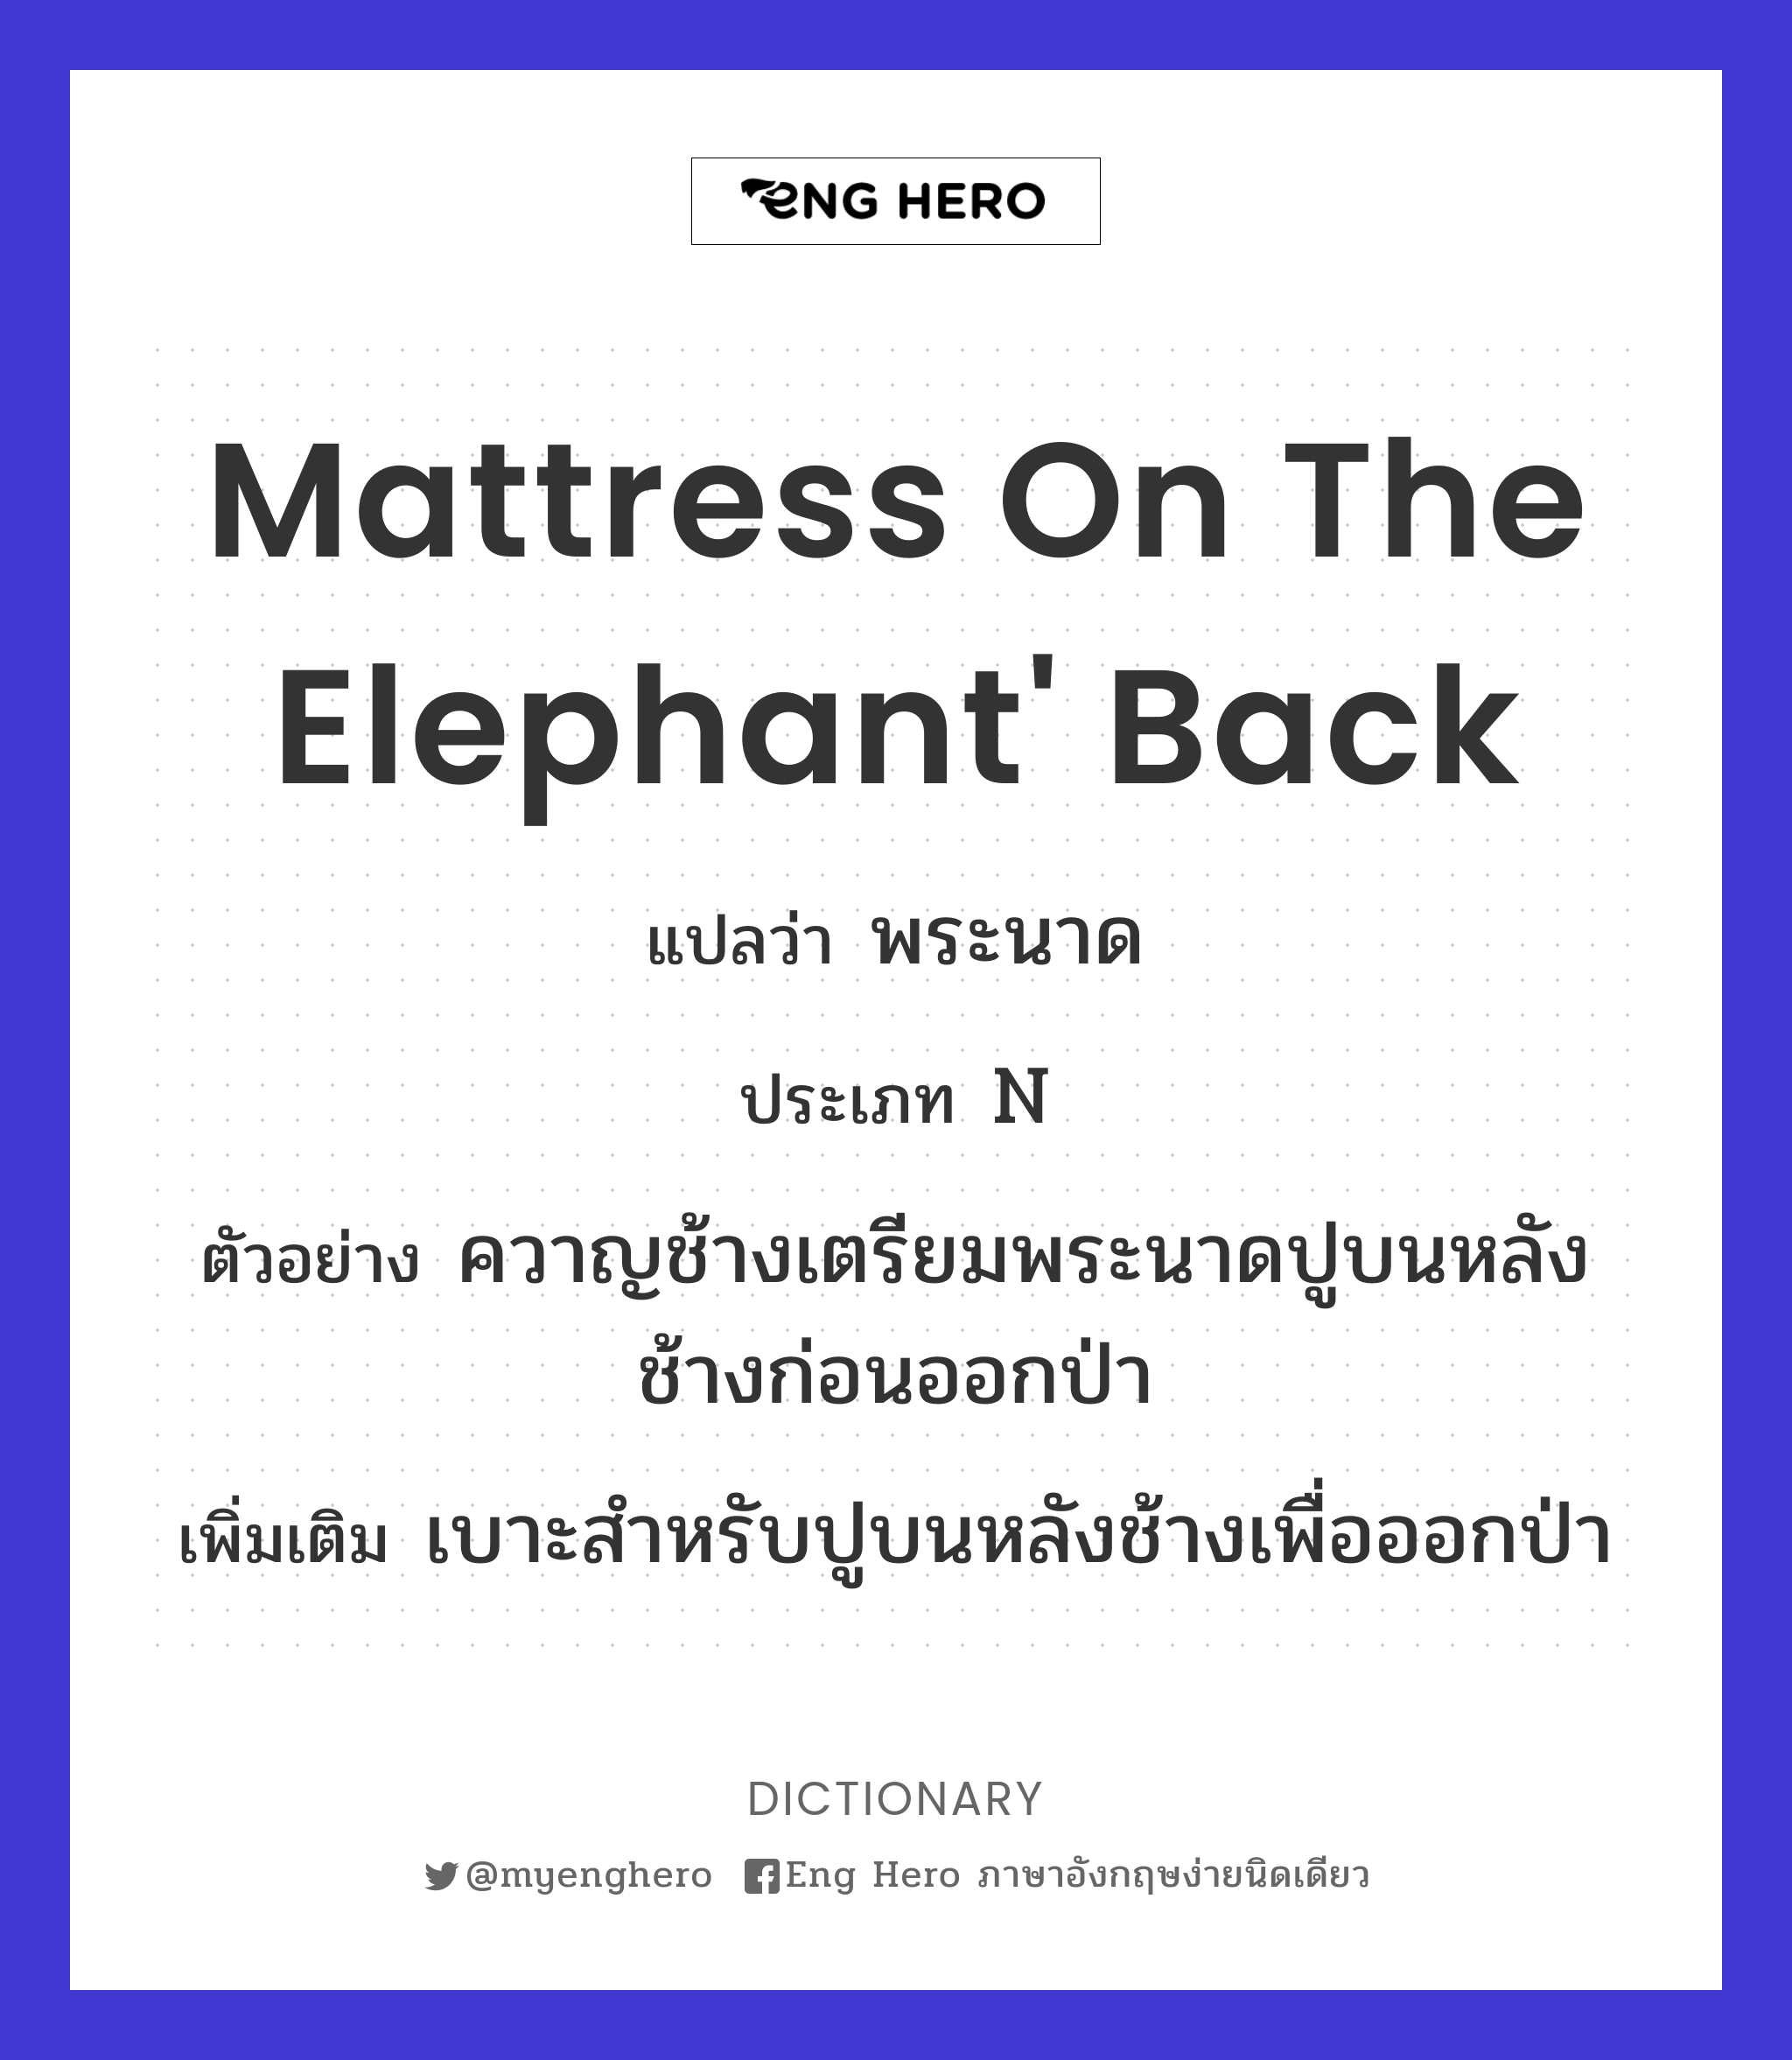 mattress on the elephant' back